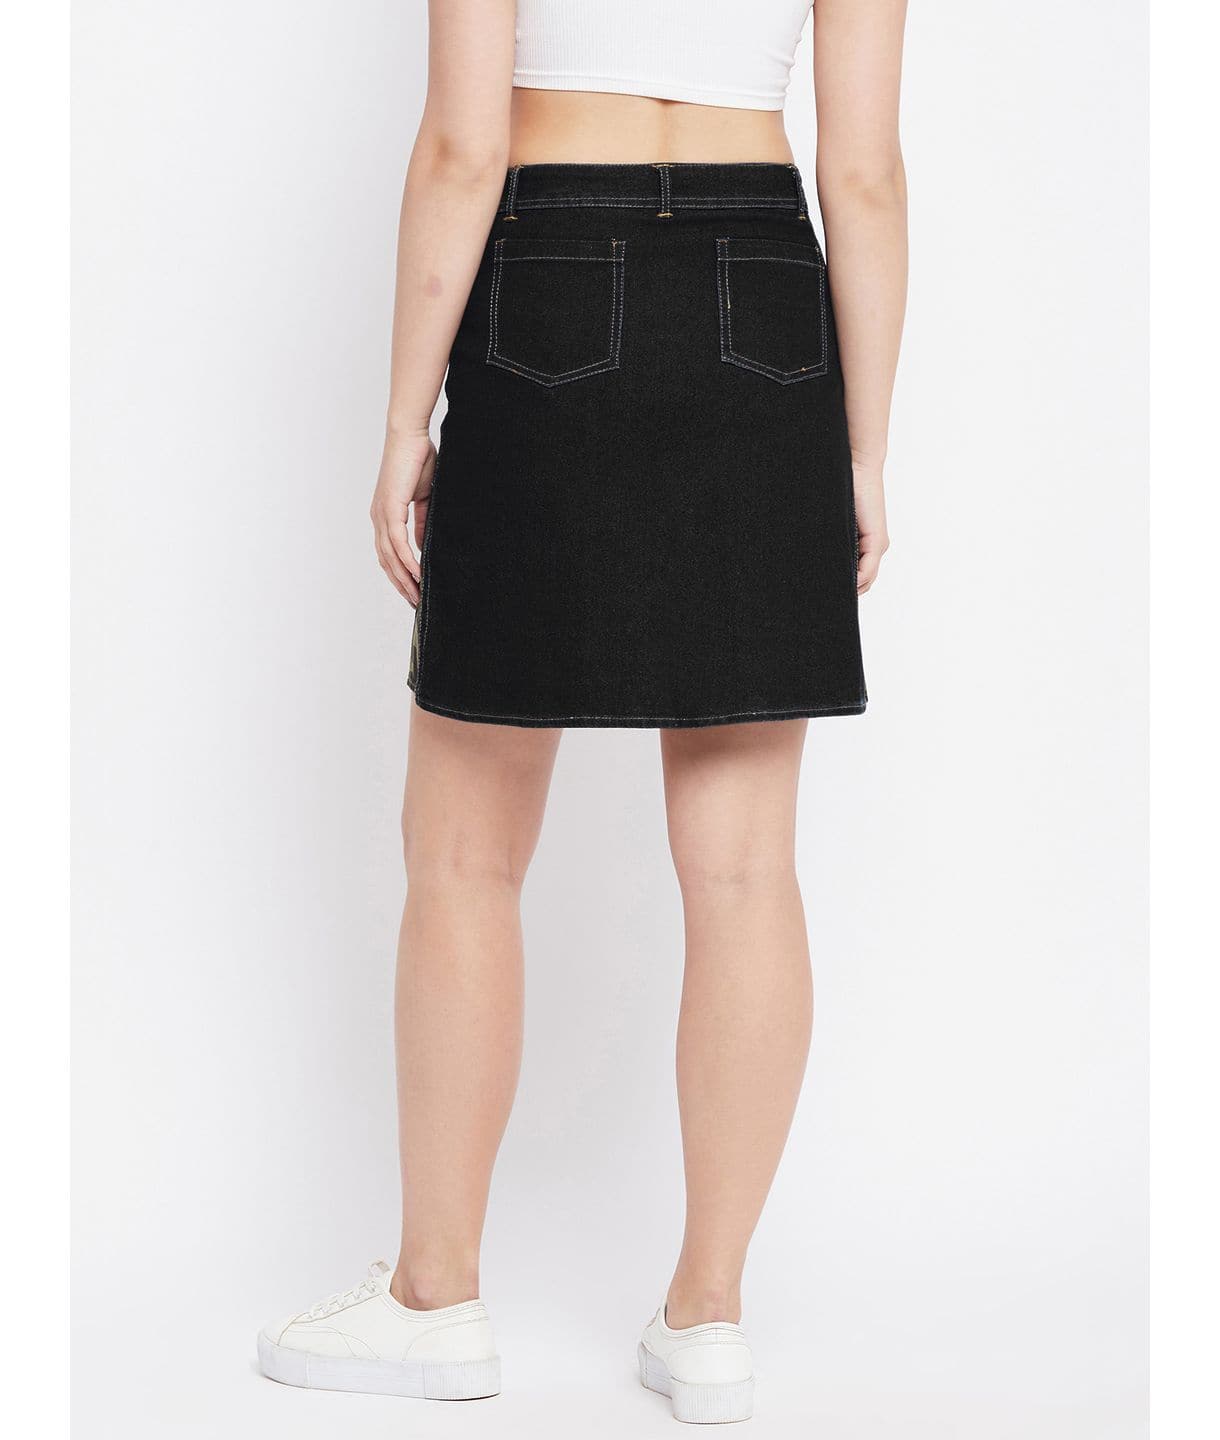 Stretchable Knee length Side Patch Denim Skirt - Uptownie